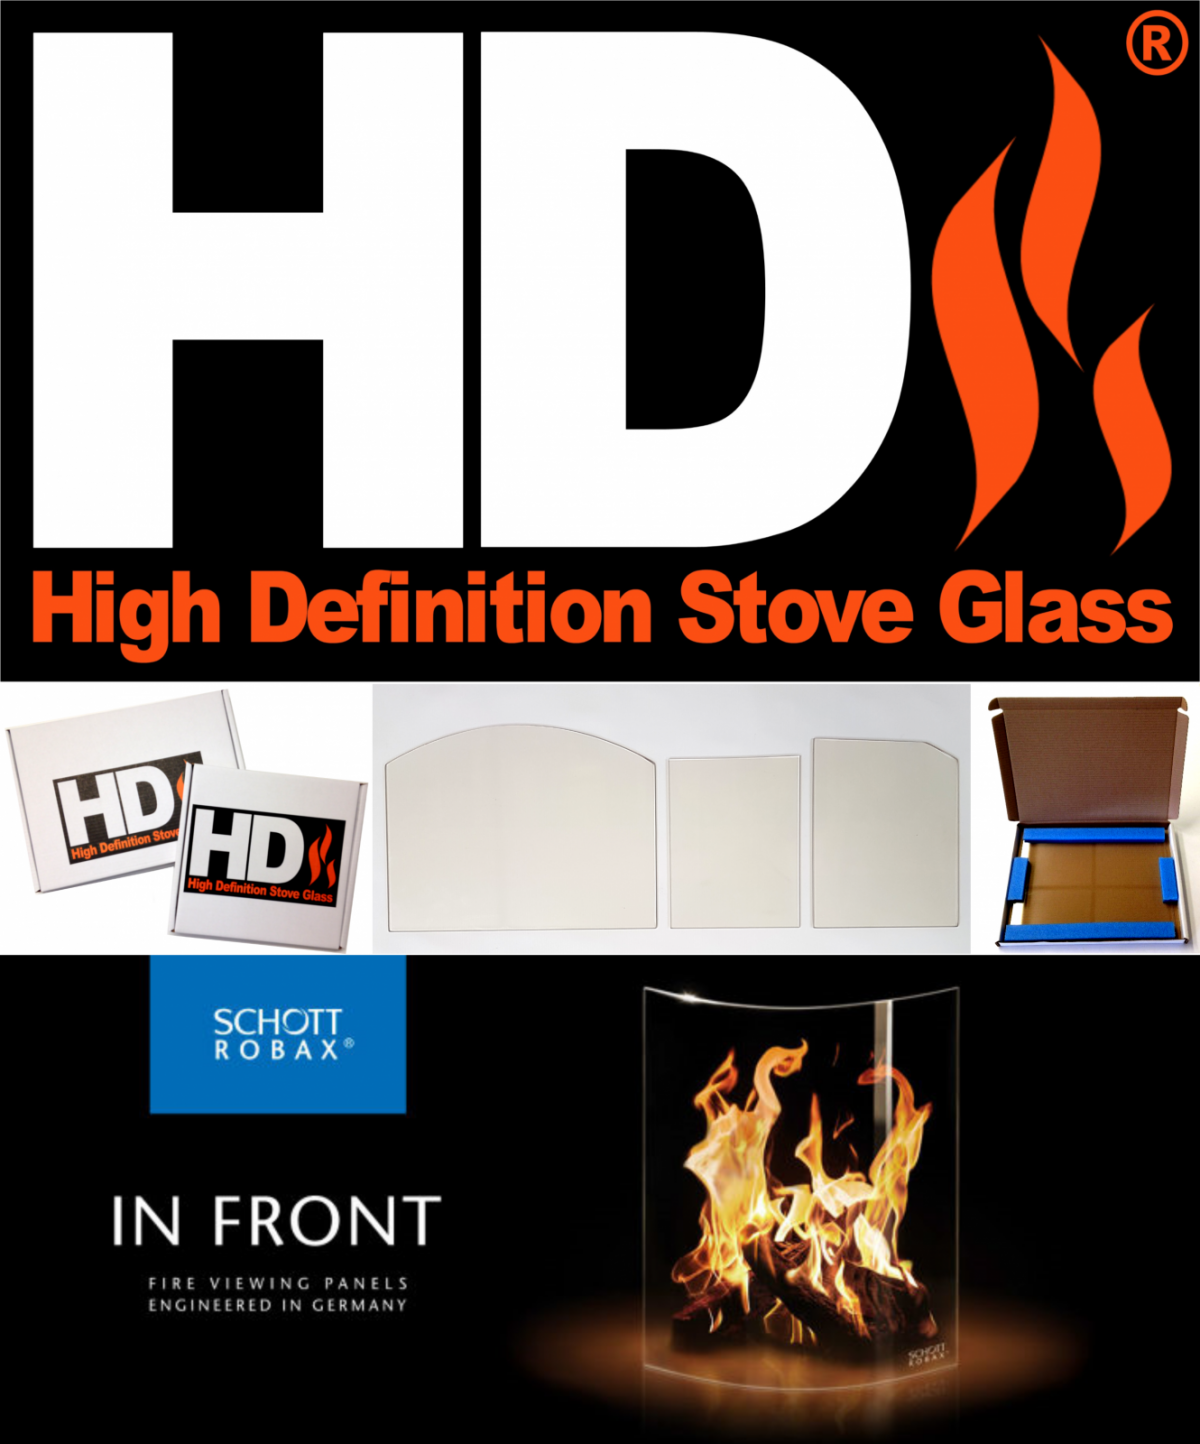 High Definition Stove Glass for the Gazco Sheraton